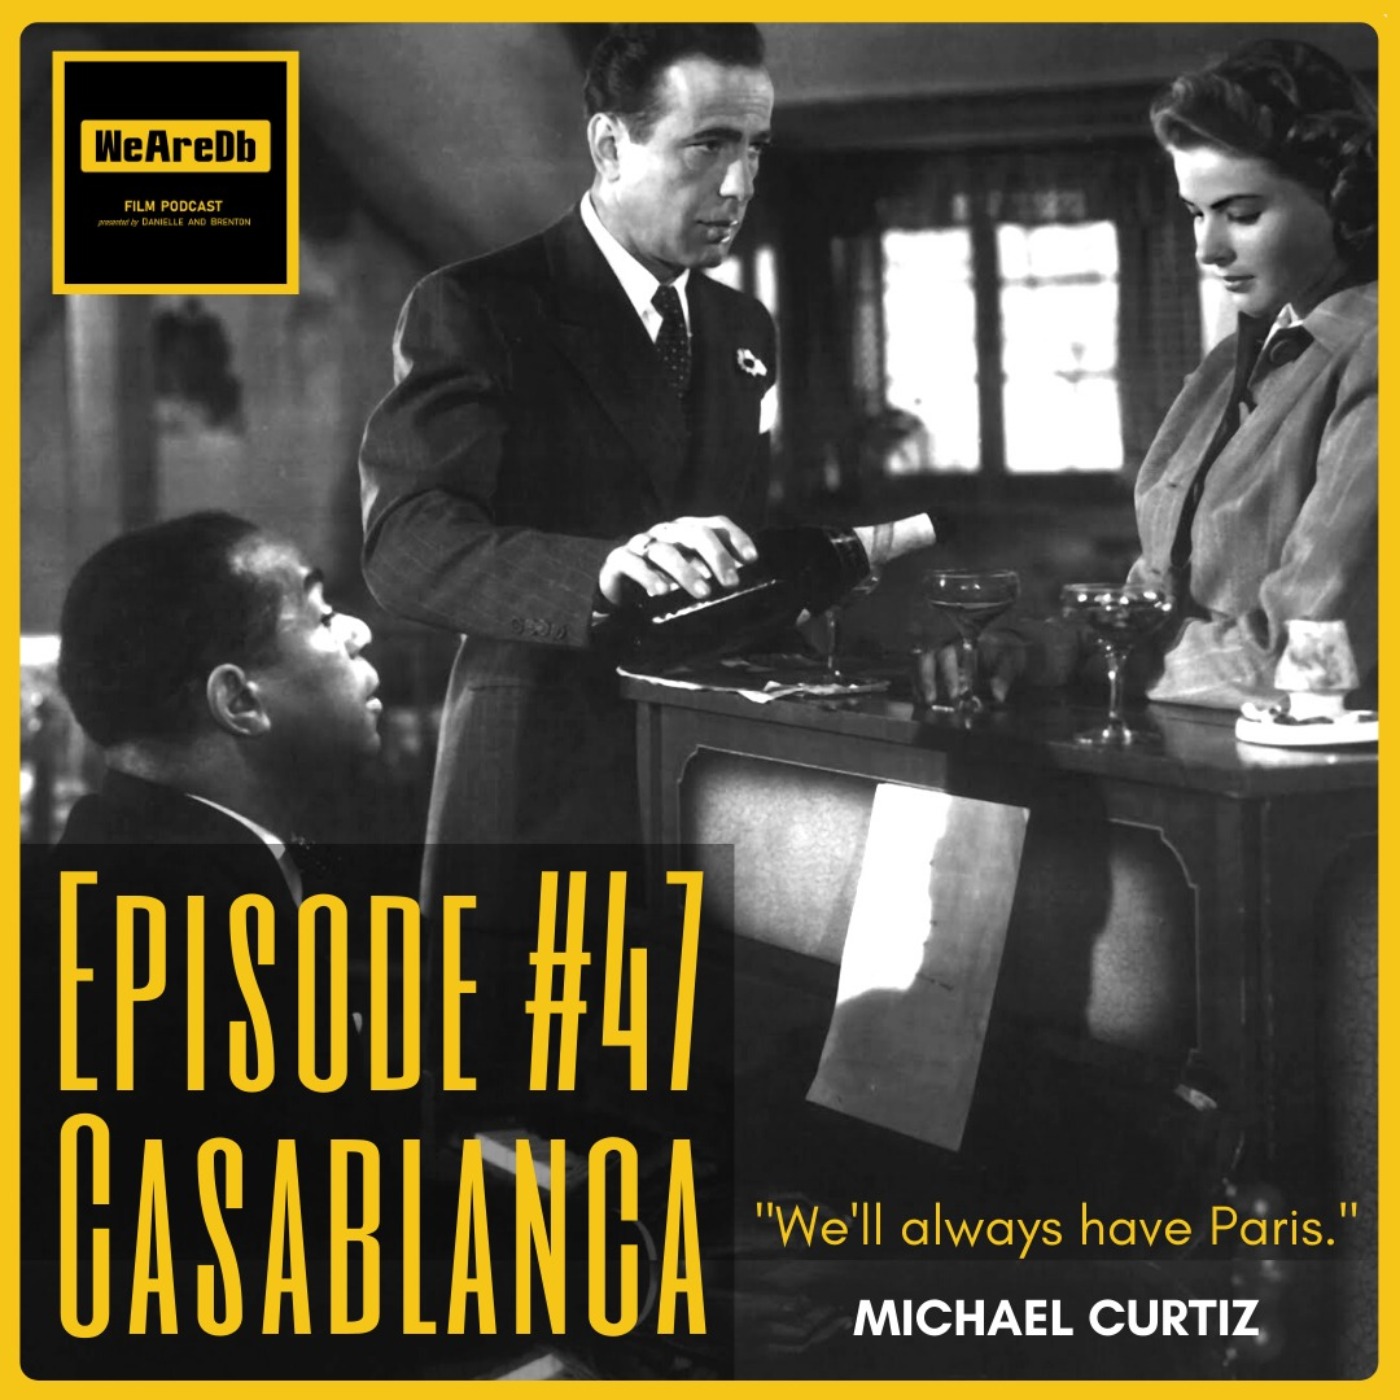 Episode #47 - Casablanca